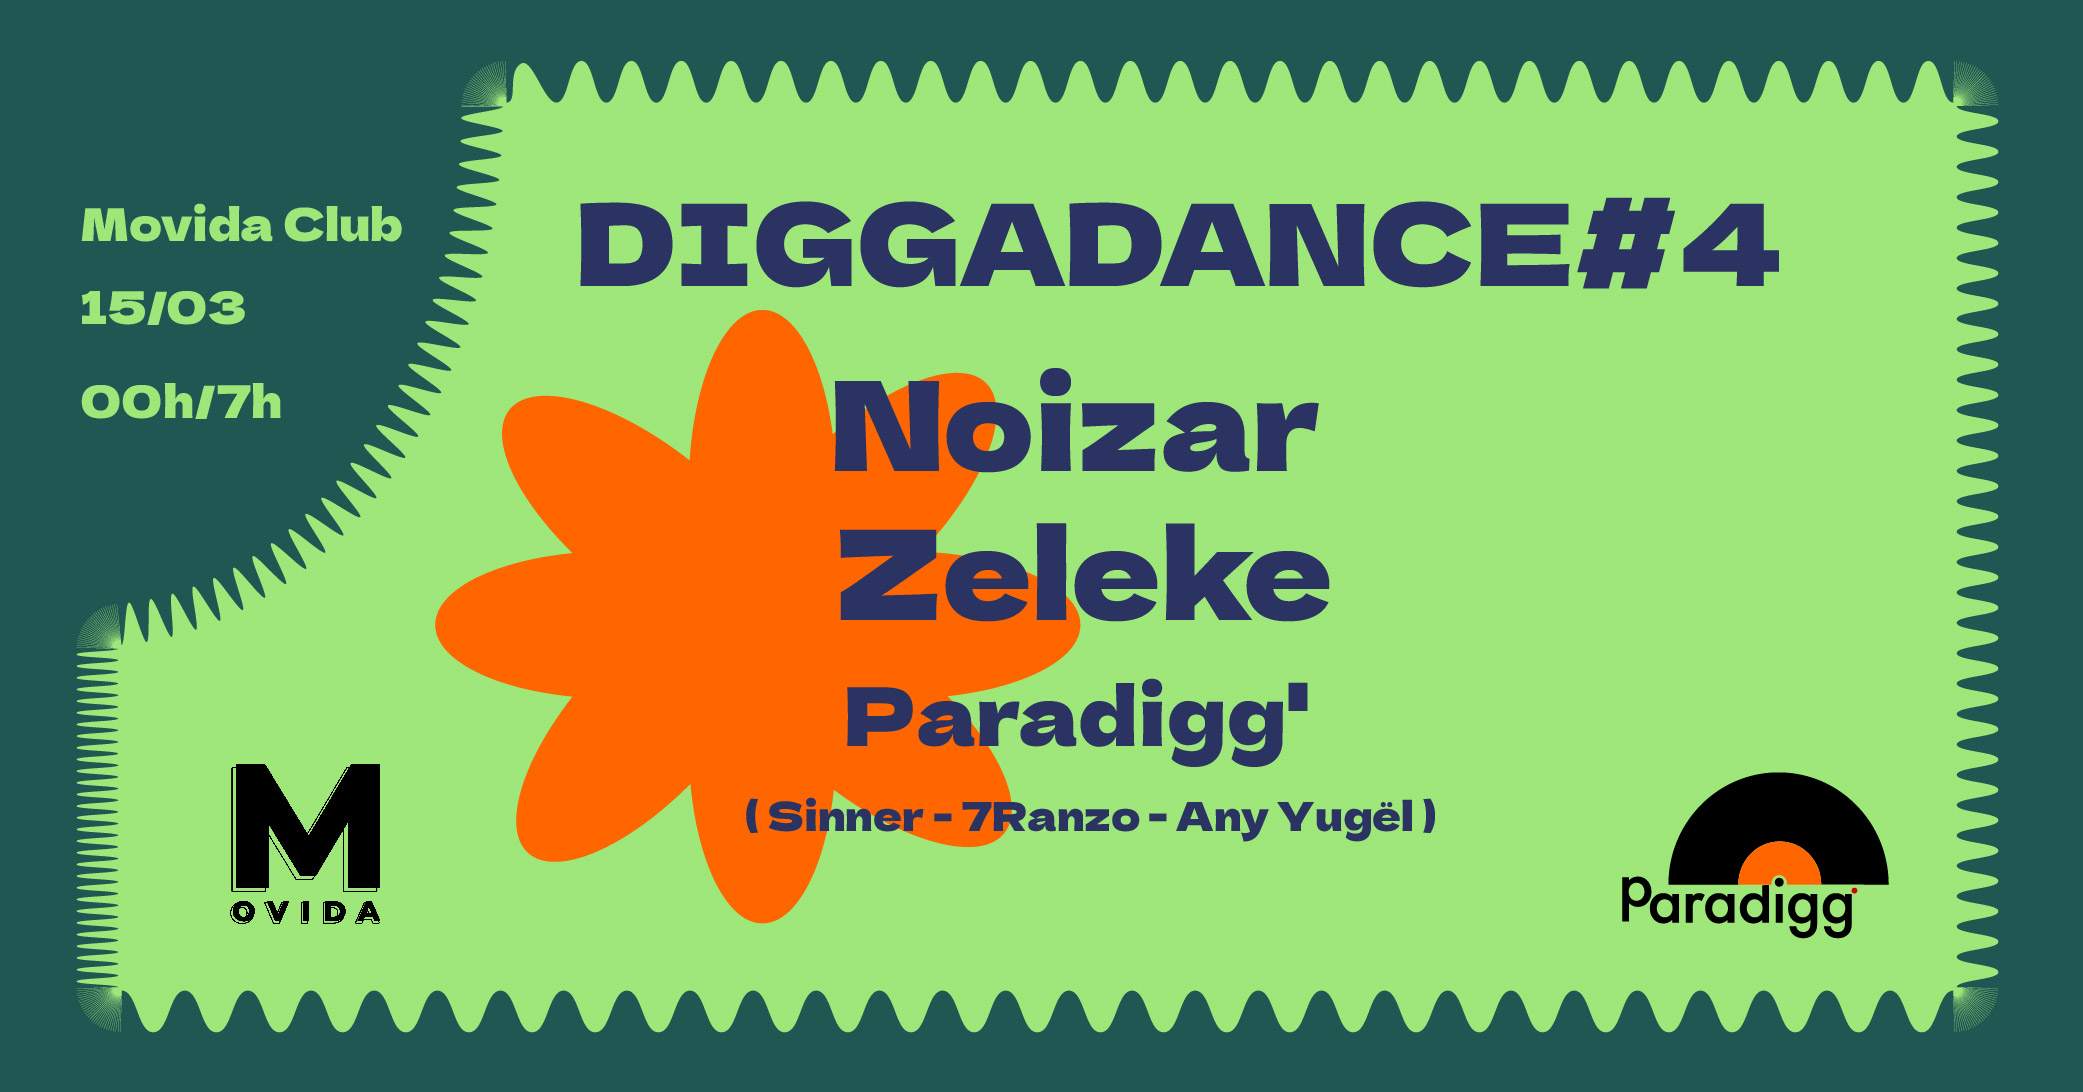 DIGGADANCE #4 - フライヤー表